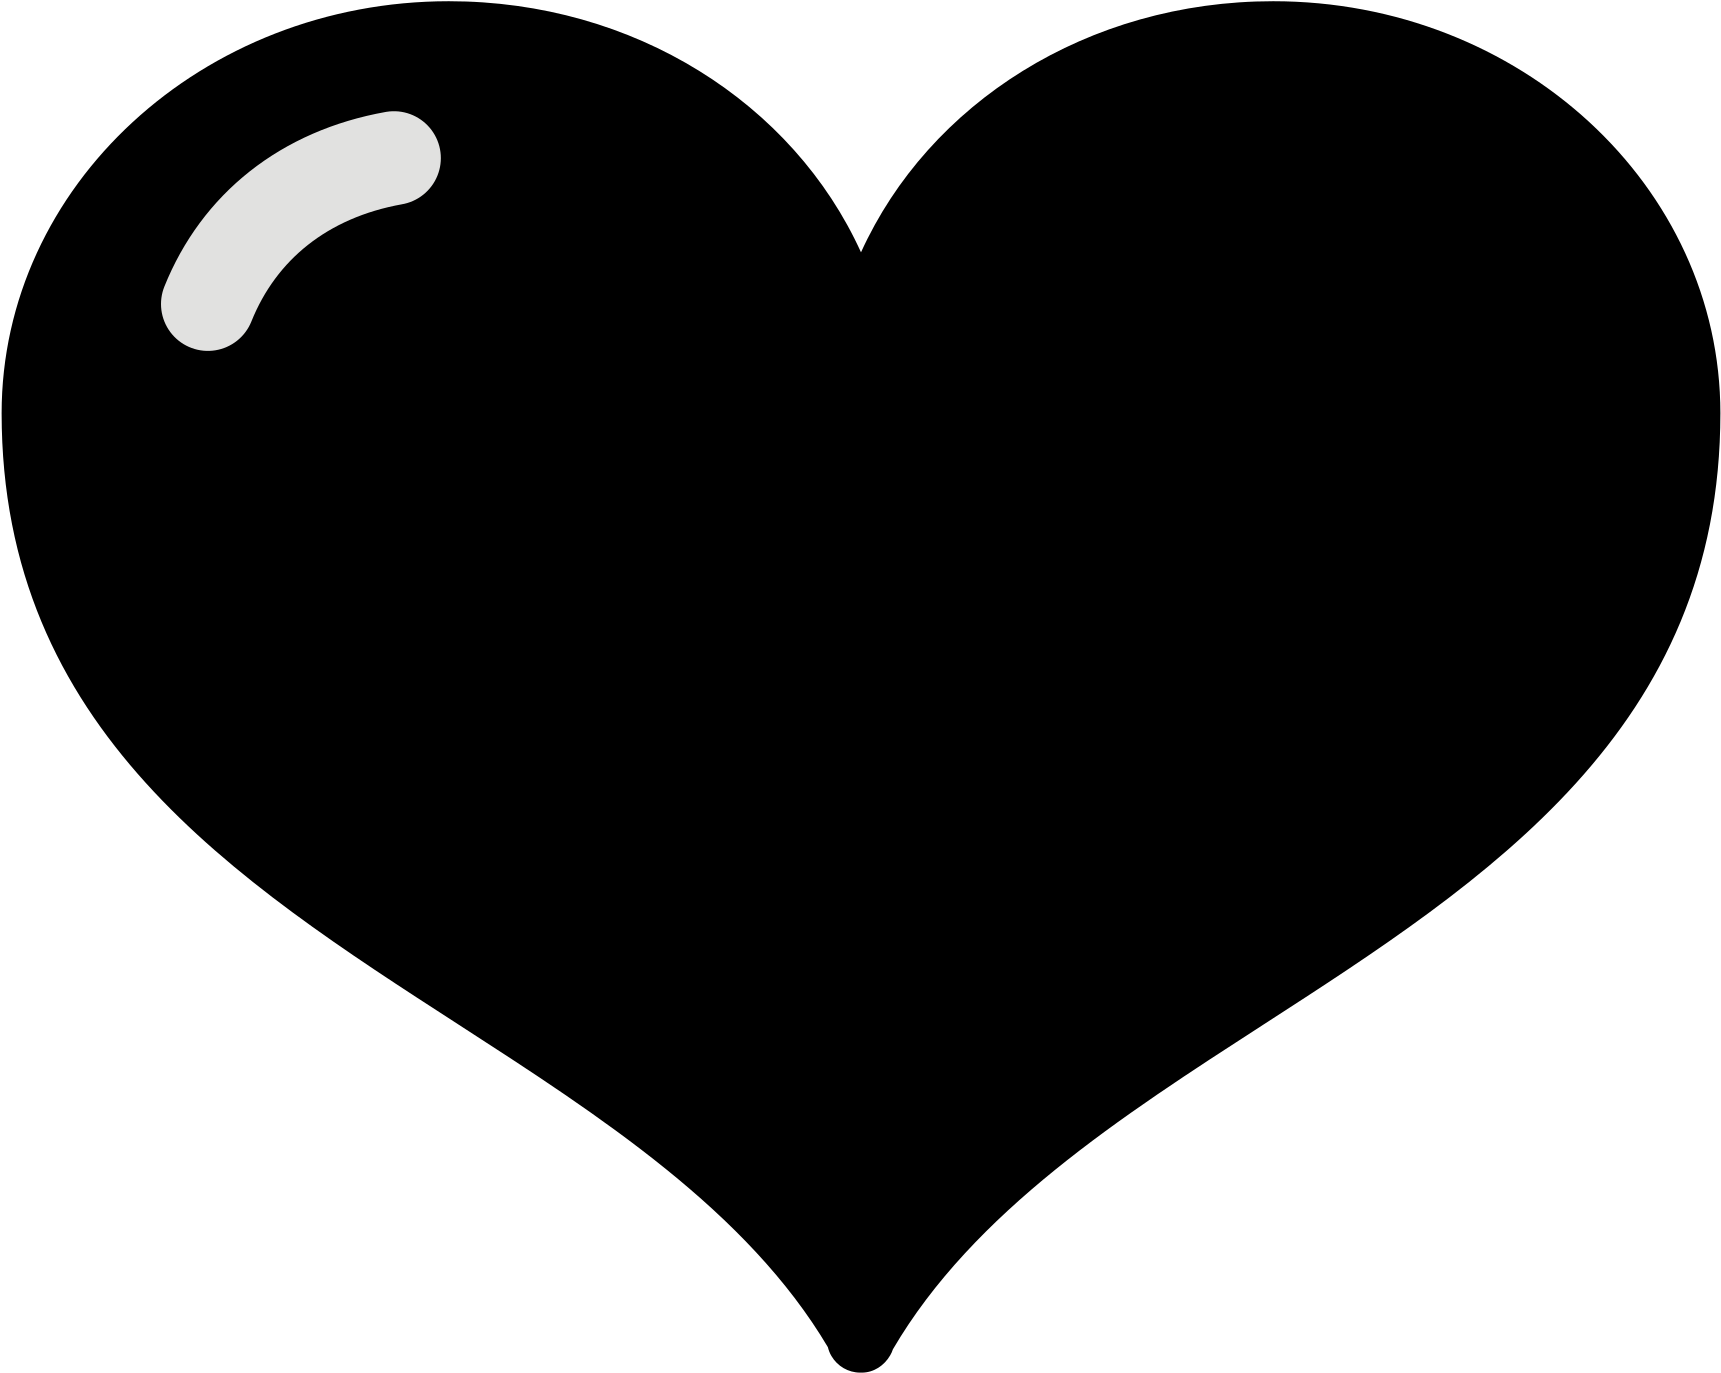 Black Heart Emoji Graphic PNG image